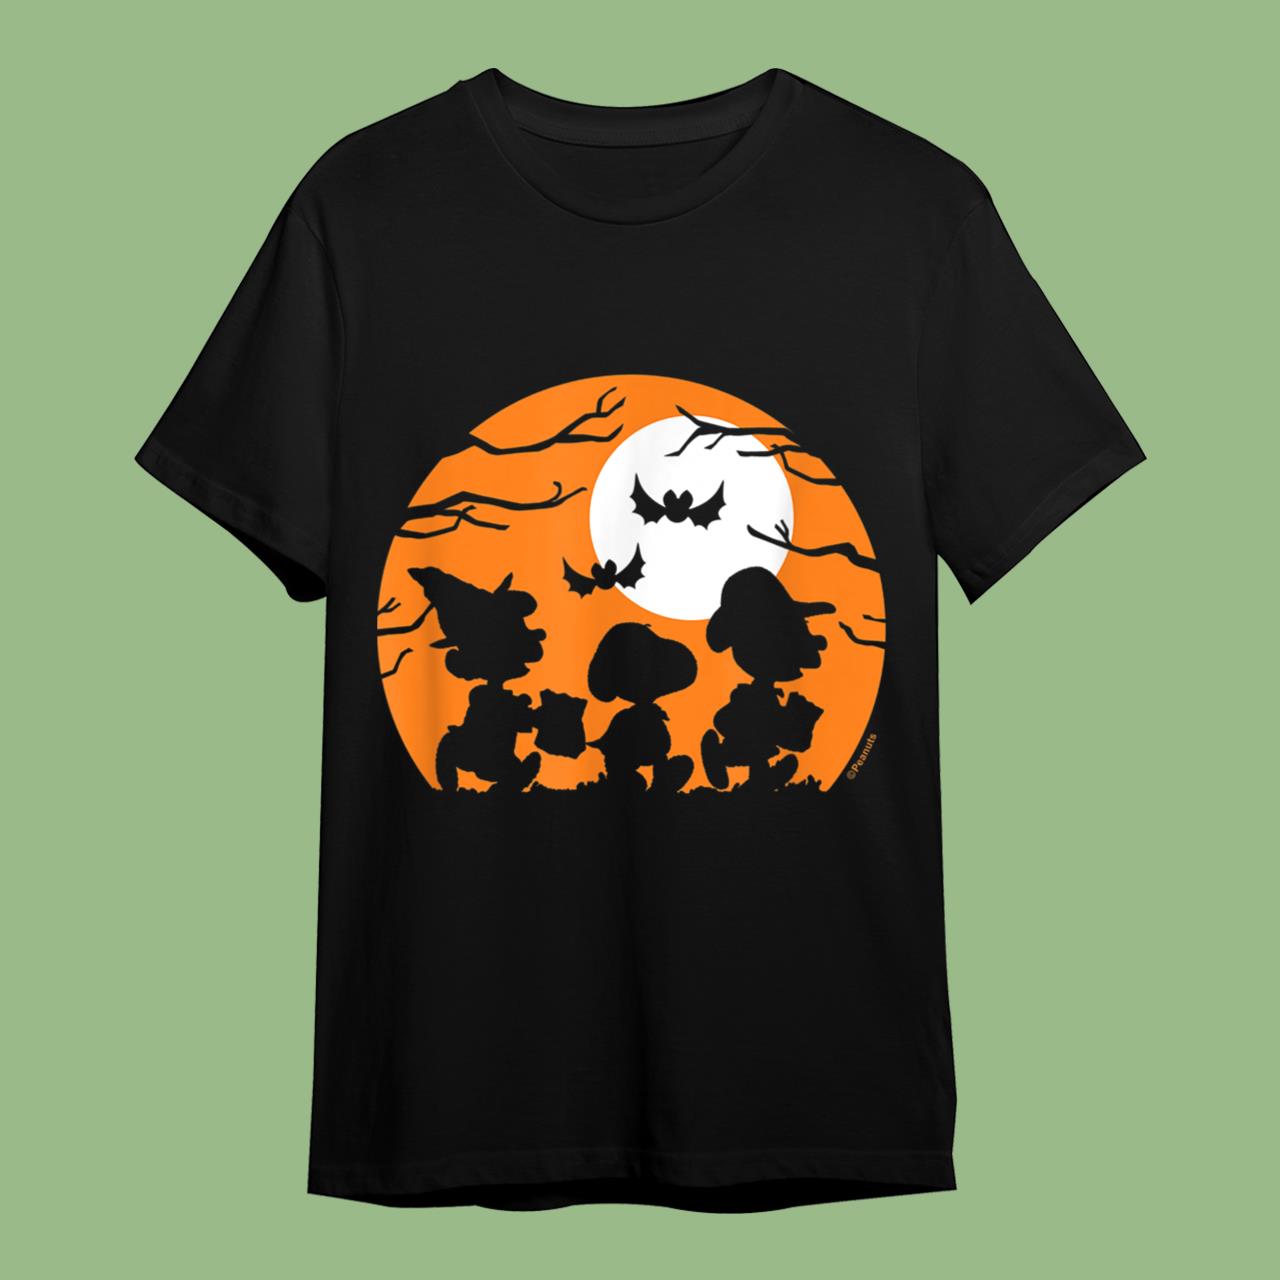 Peanuts - Halloween - Trick Or treat Silhouettes T-Shirt